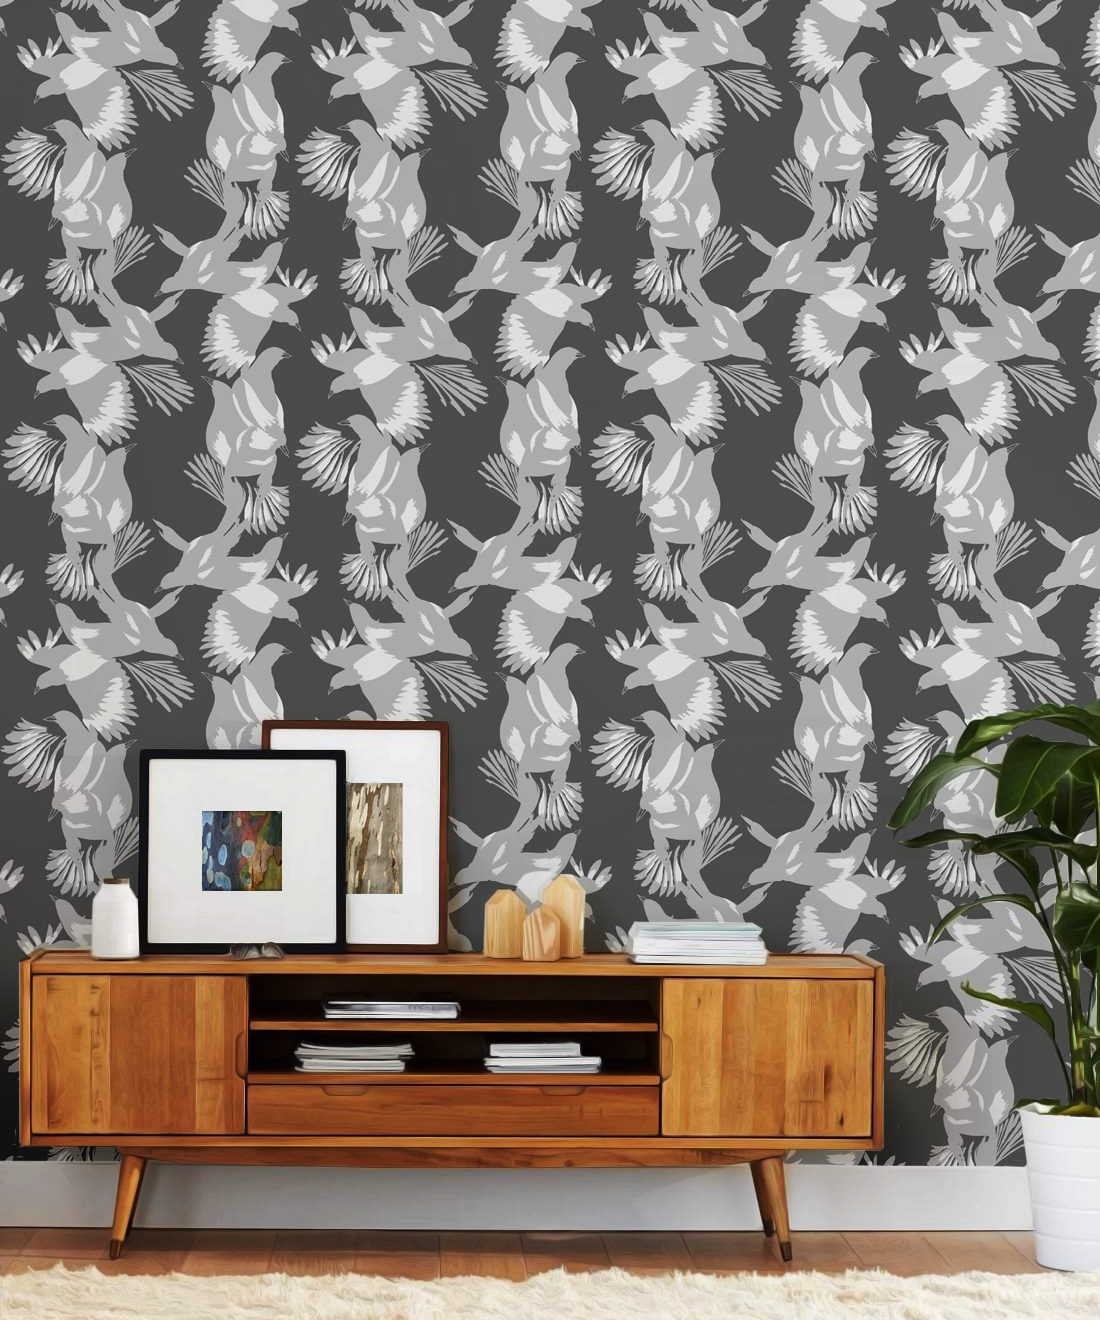 Magpie Wallpaper - Milton & King - Kingdom Home - Papel pintado de pájaros - Slate Insitu